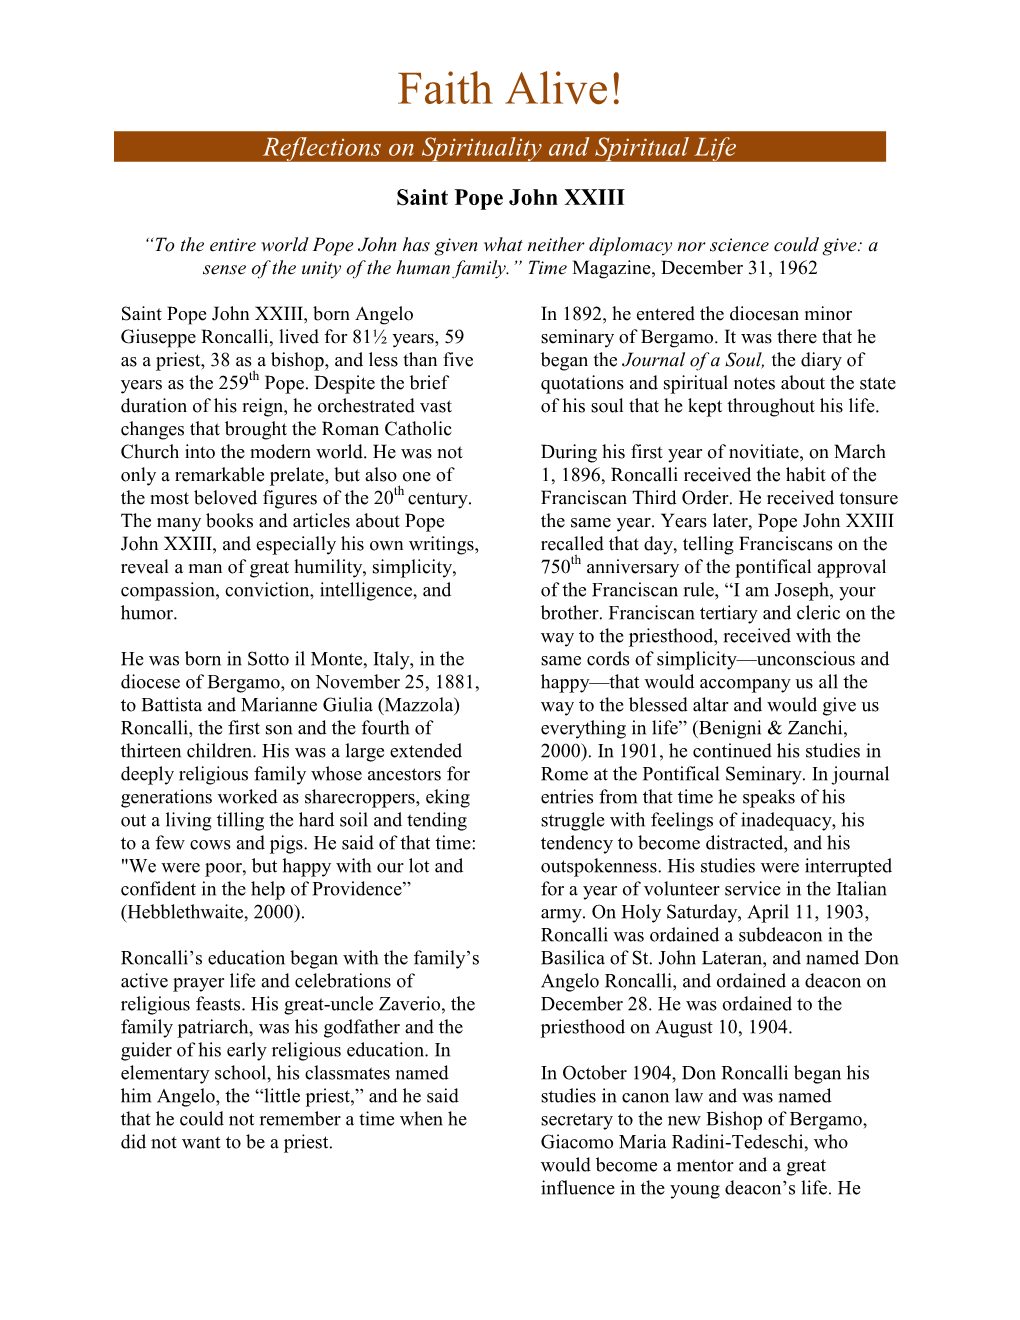 Faith Alive-Saint John XXIII.Pdf